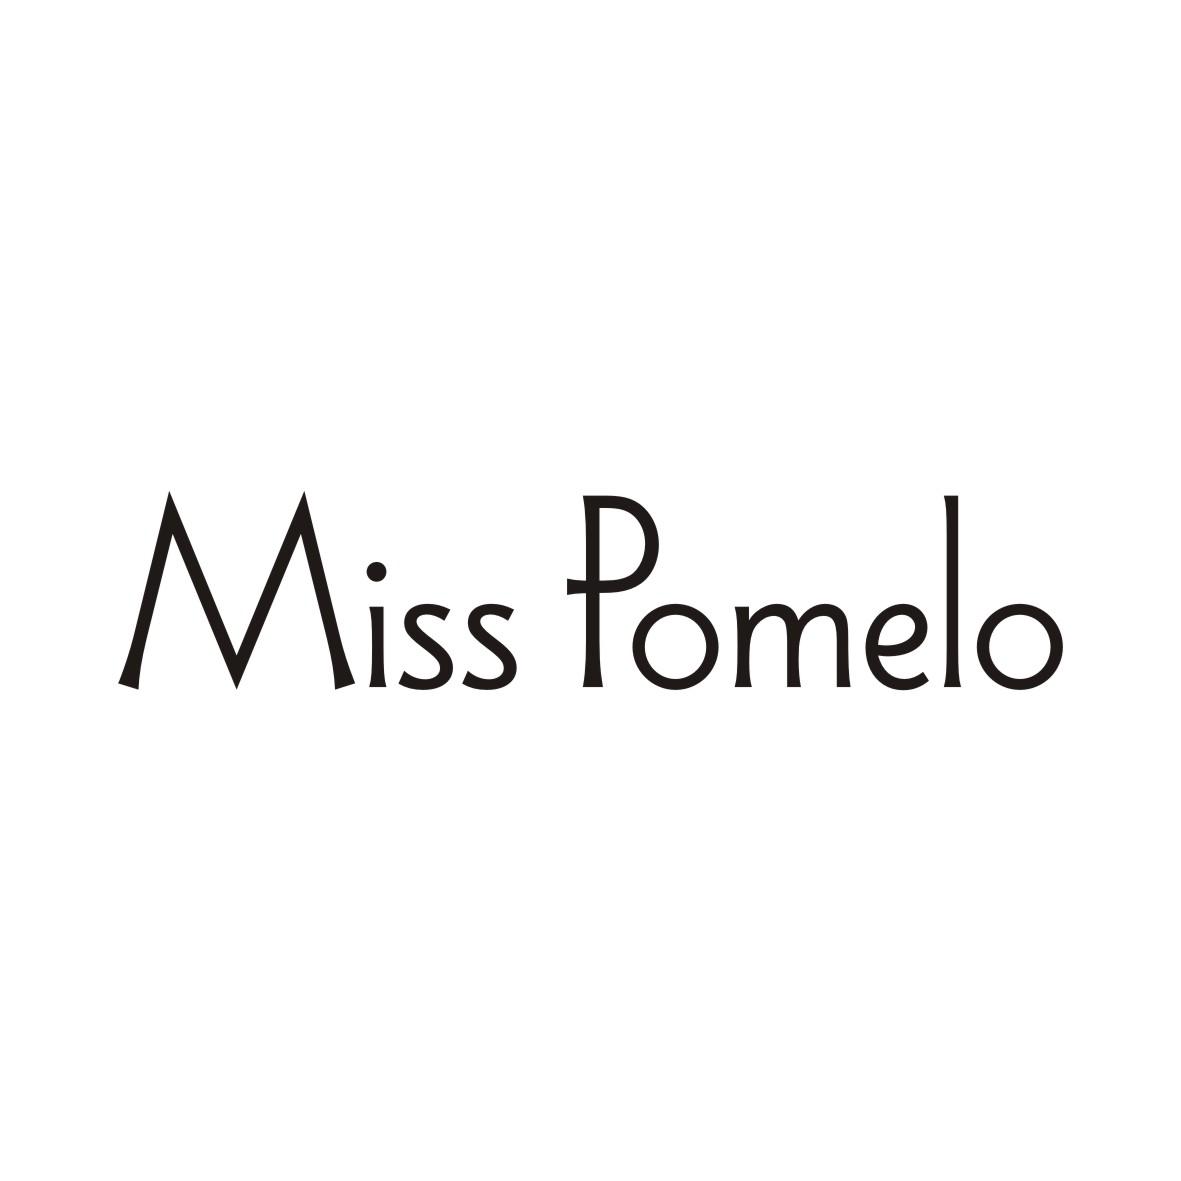 MISS POMELO